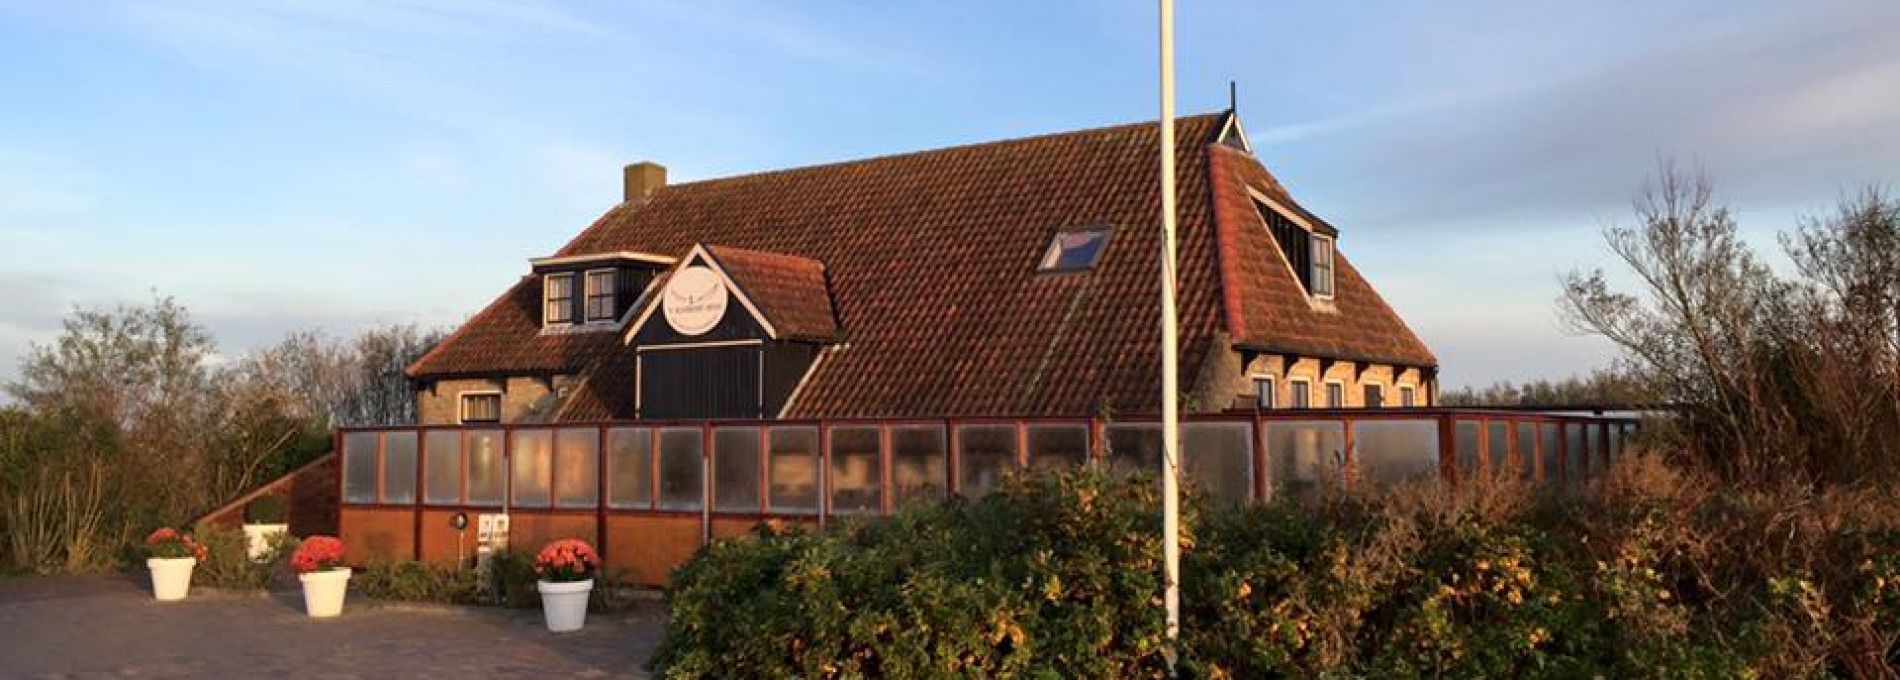 Restaurant 't Koaikershuus - Tourist Information “VVV” Ameland